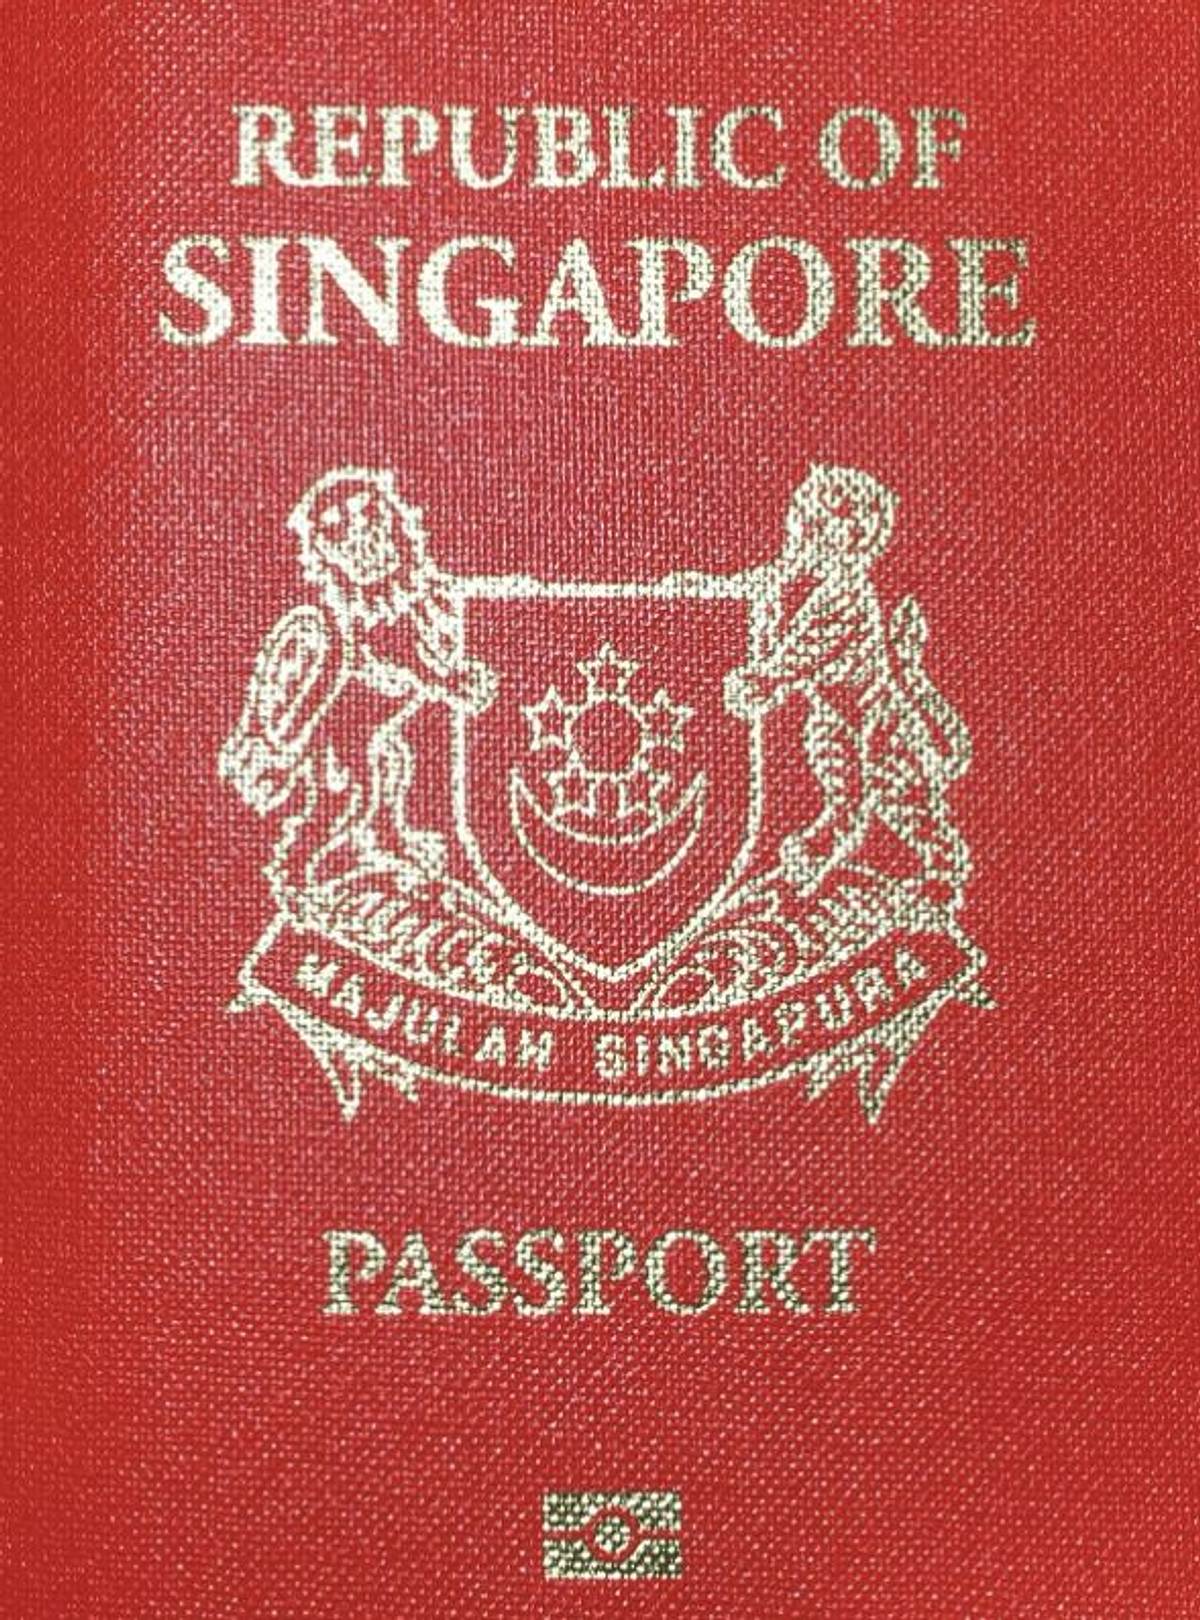 Singapur-Reisepass